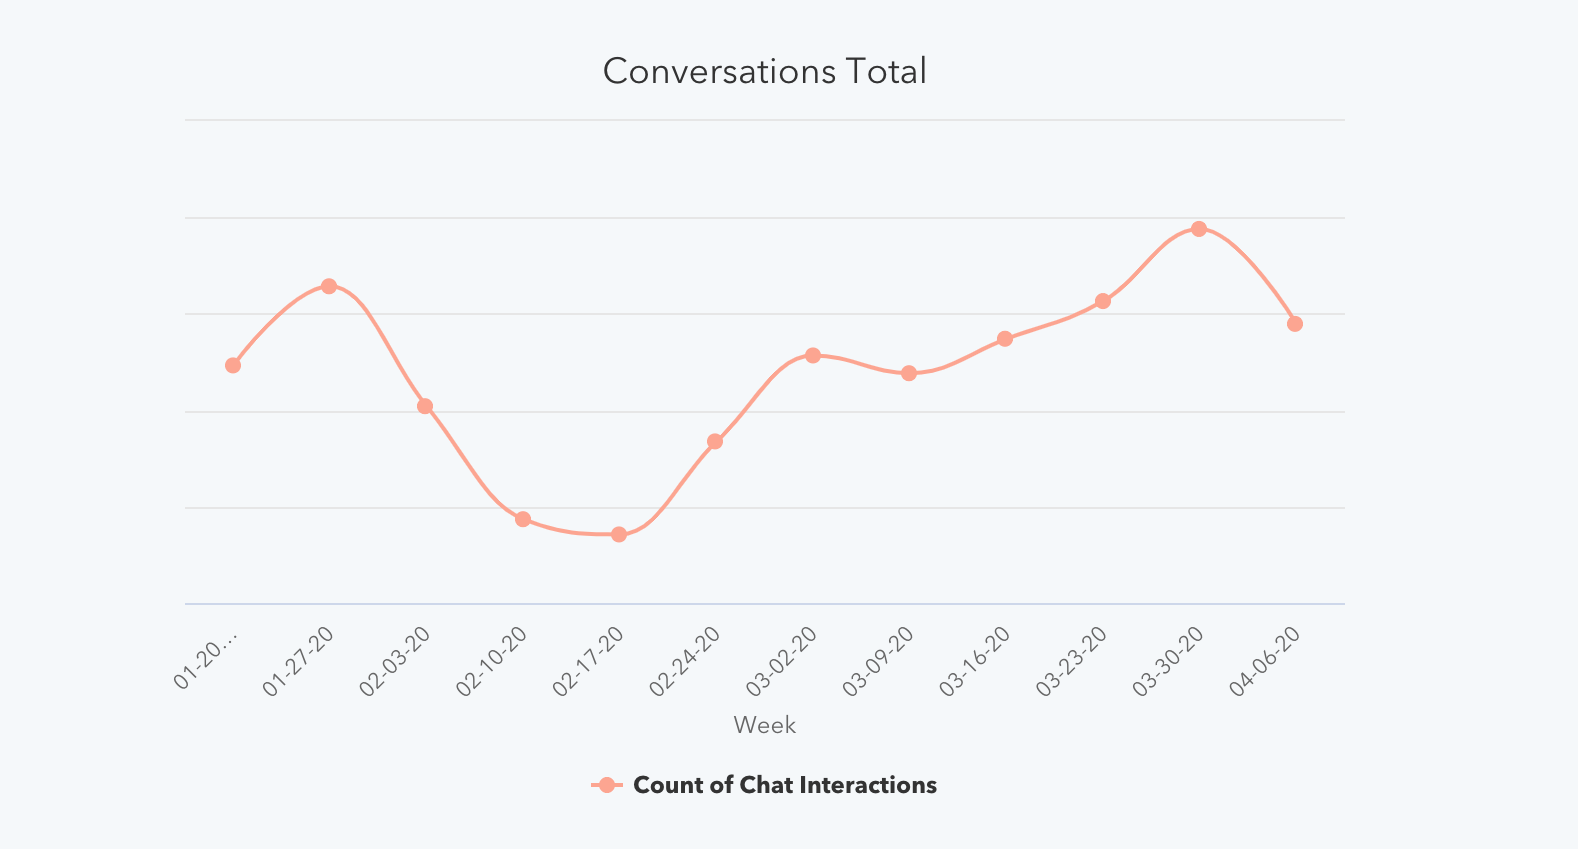 Conversations total